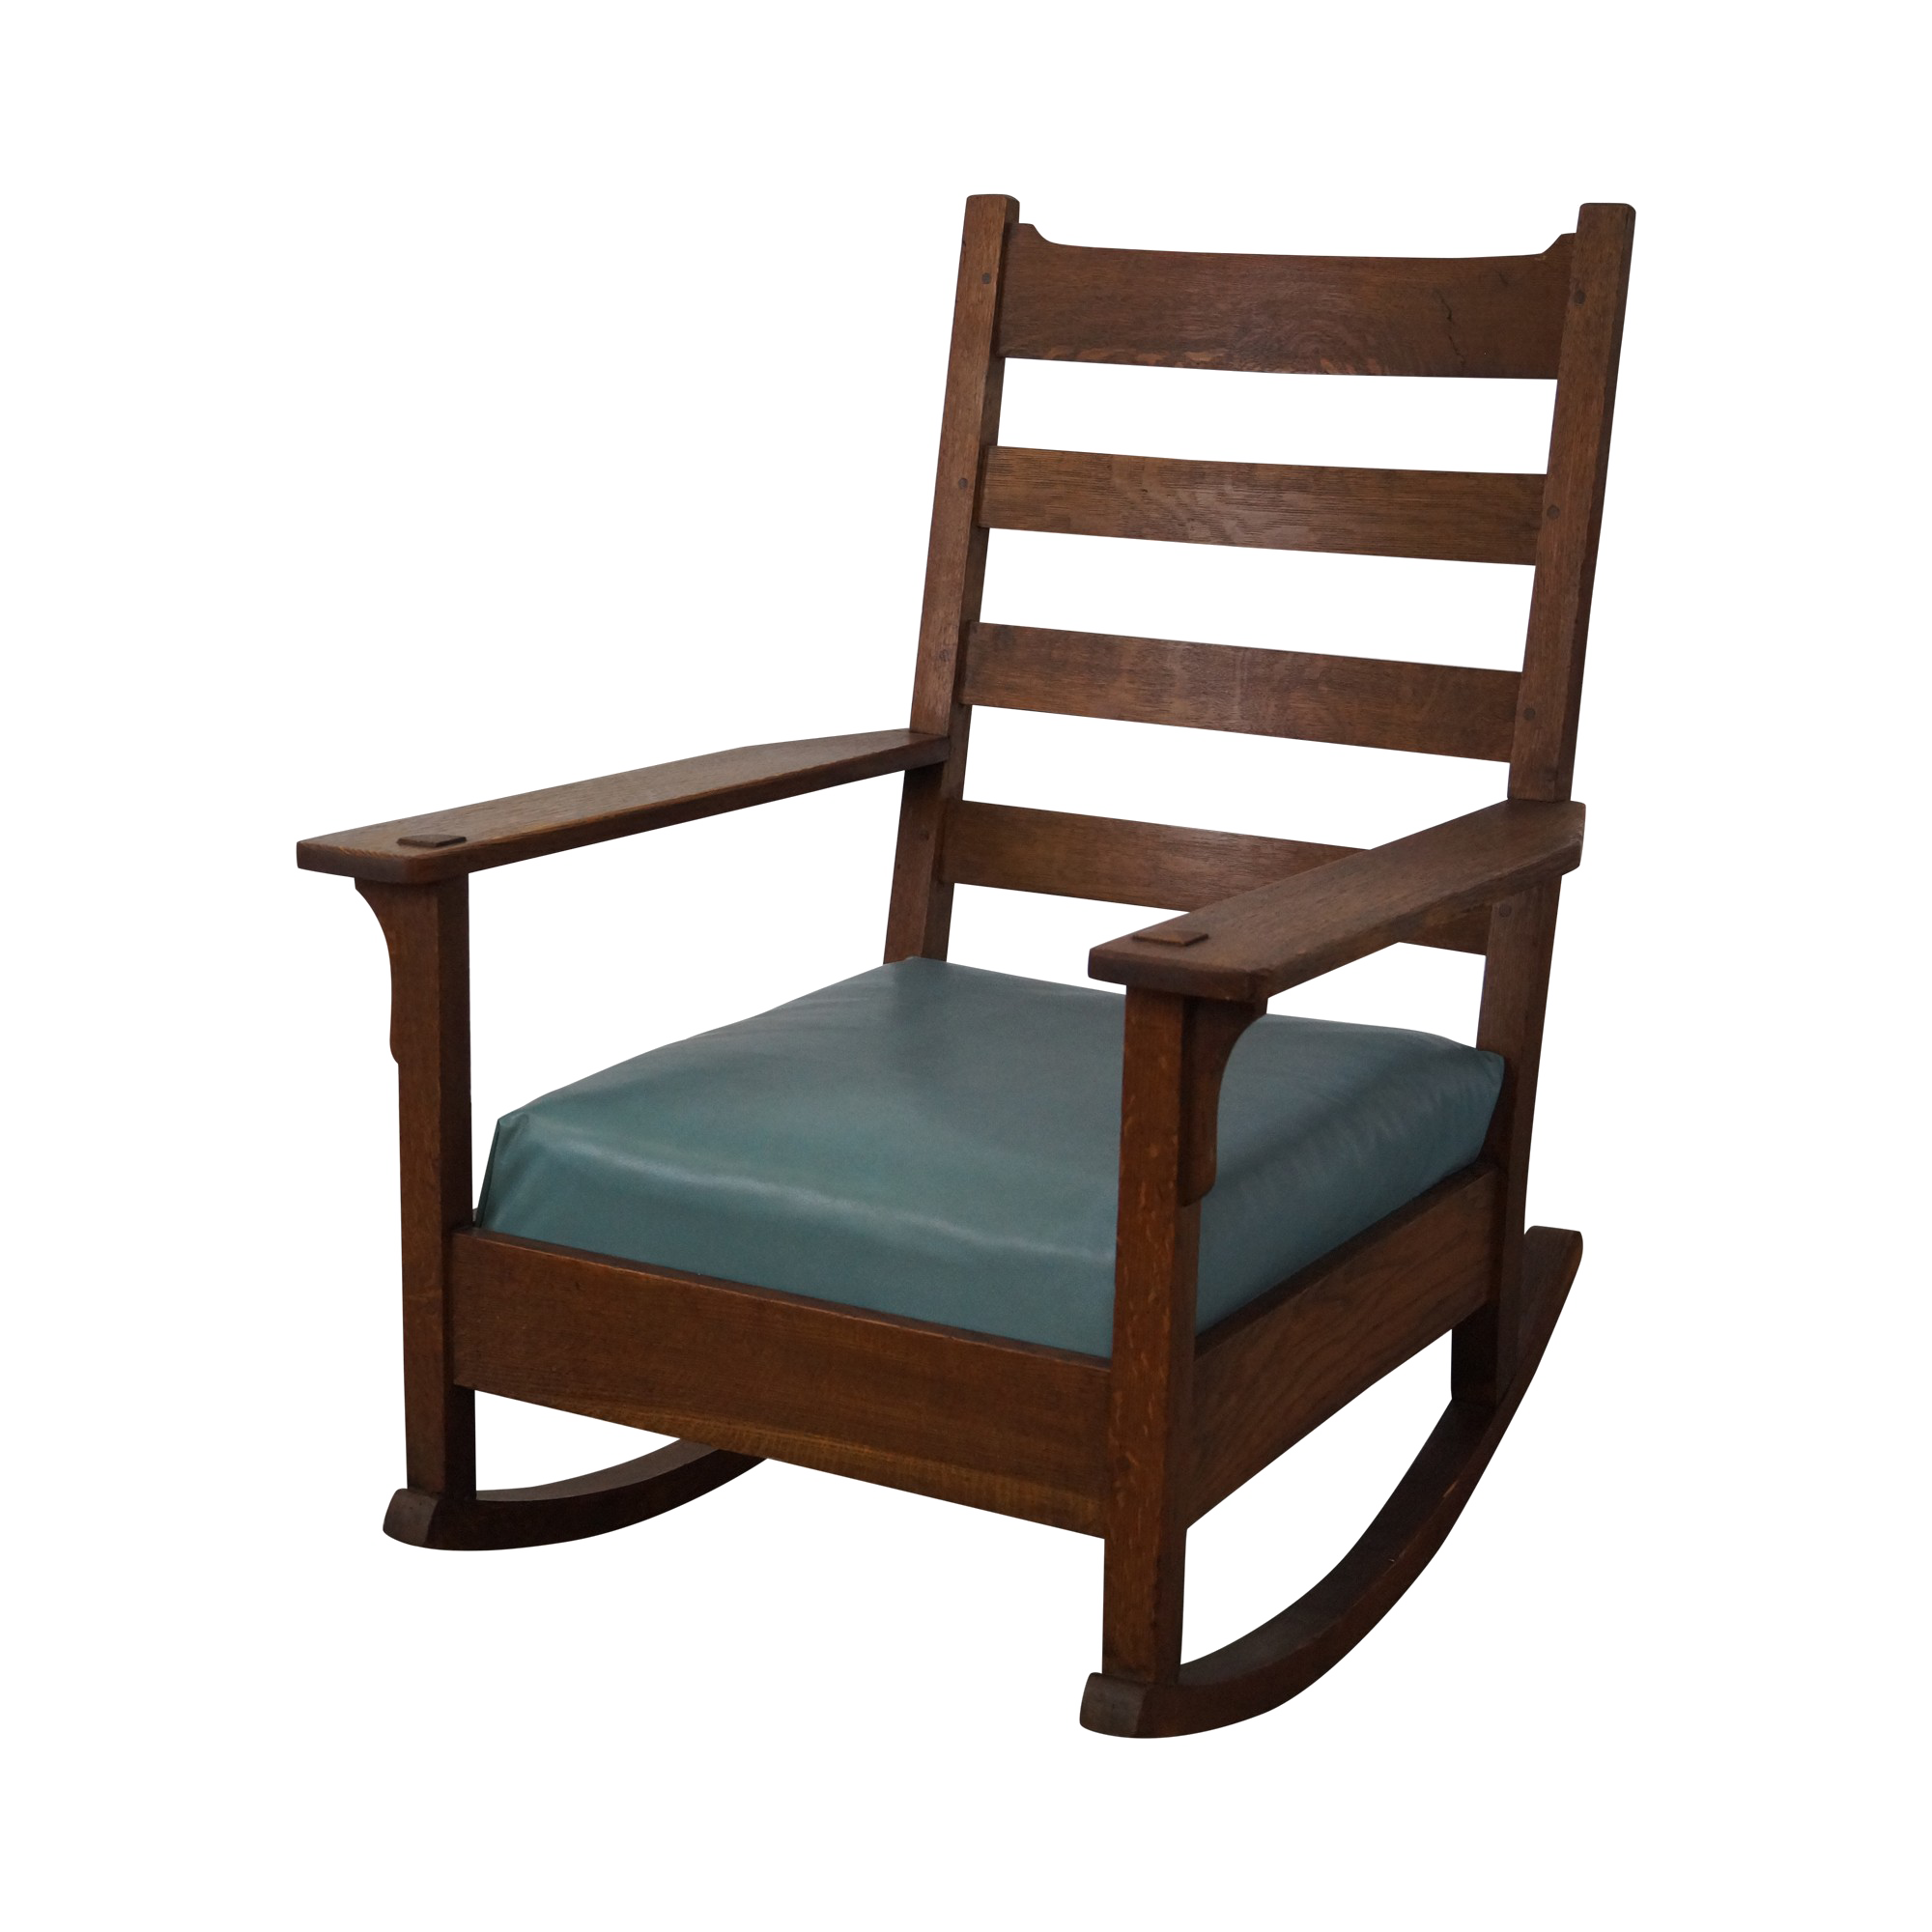 Download PNG image - Ladder-Back Chair PNG Image 